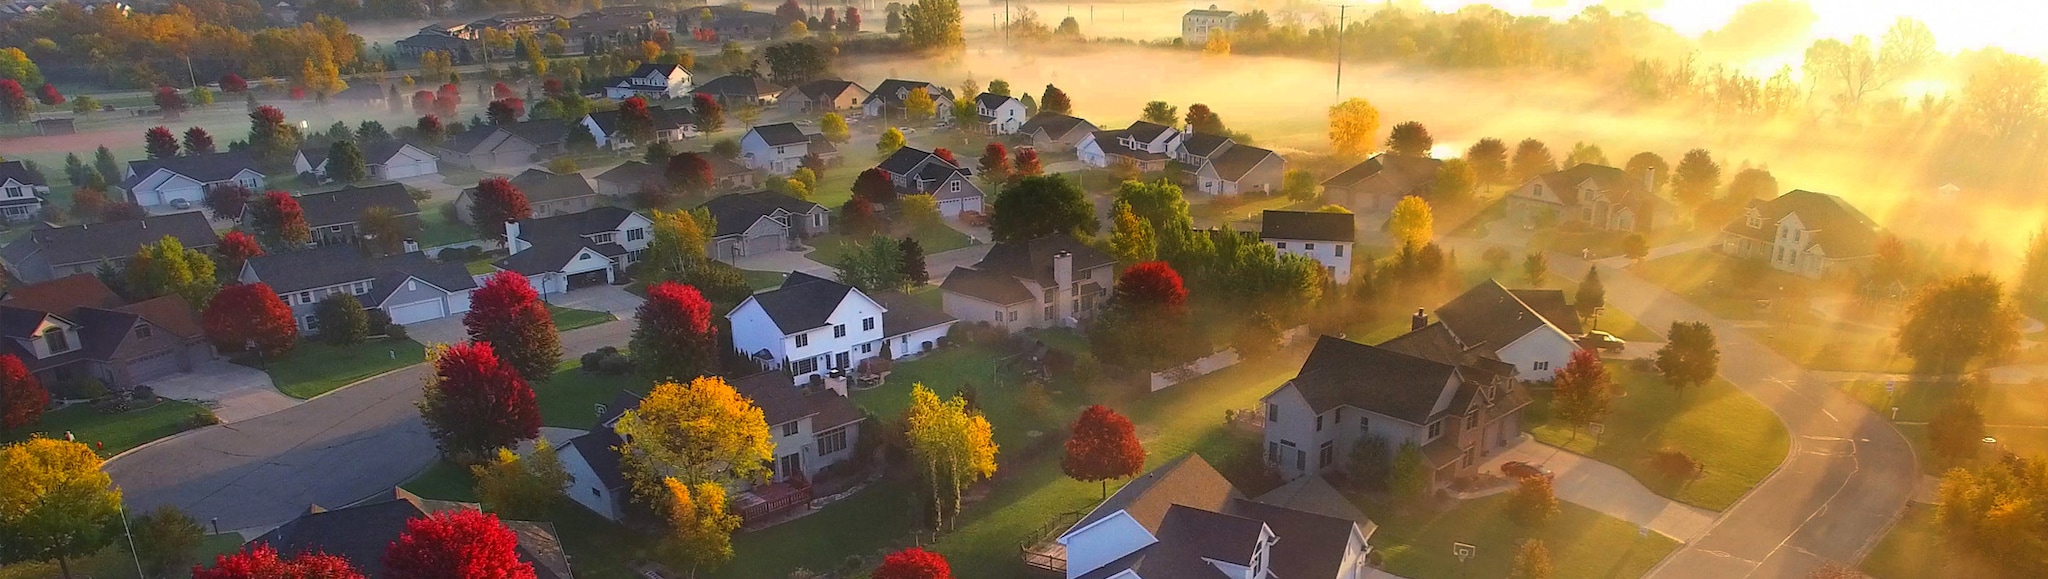 aerial view of neighborhood homes during sunrise